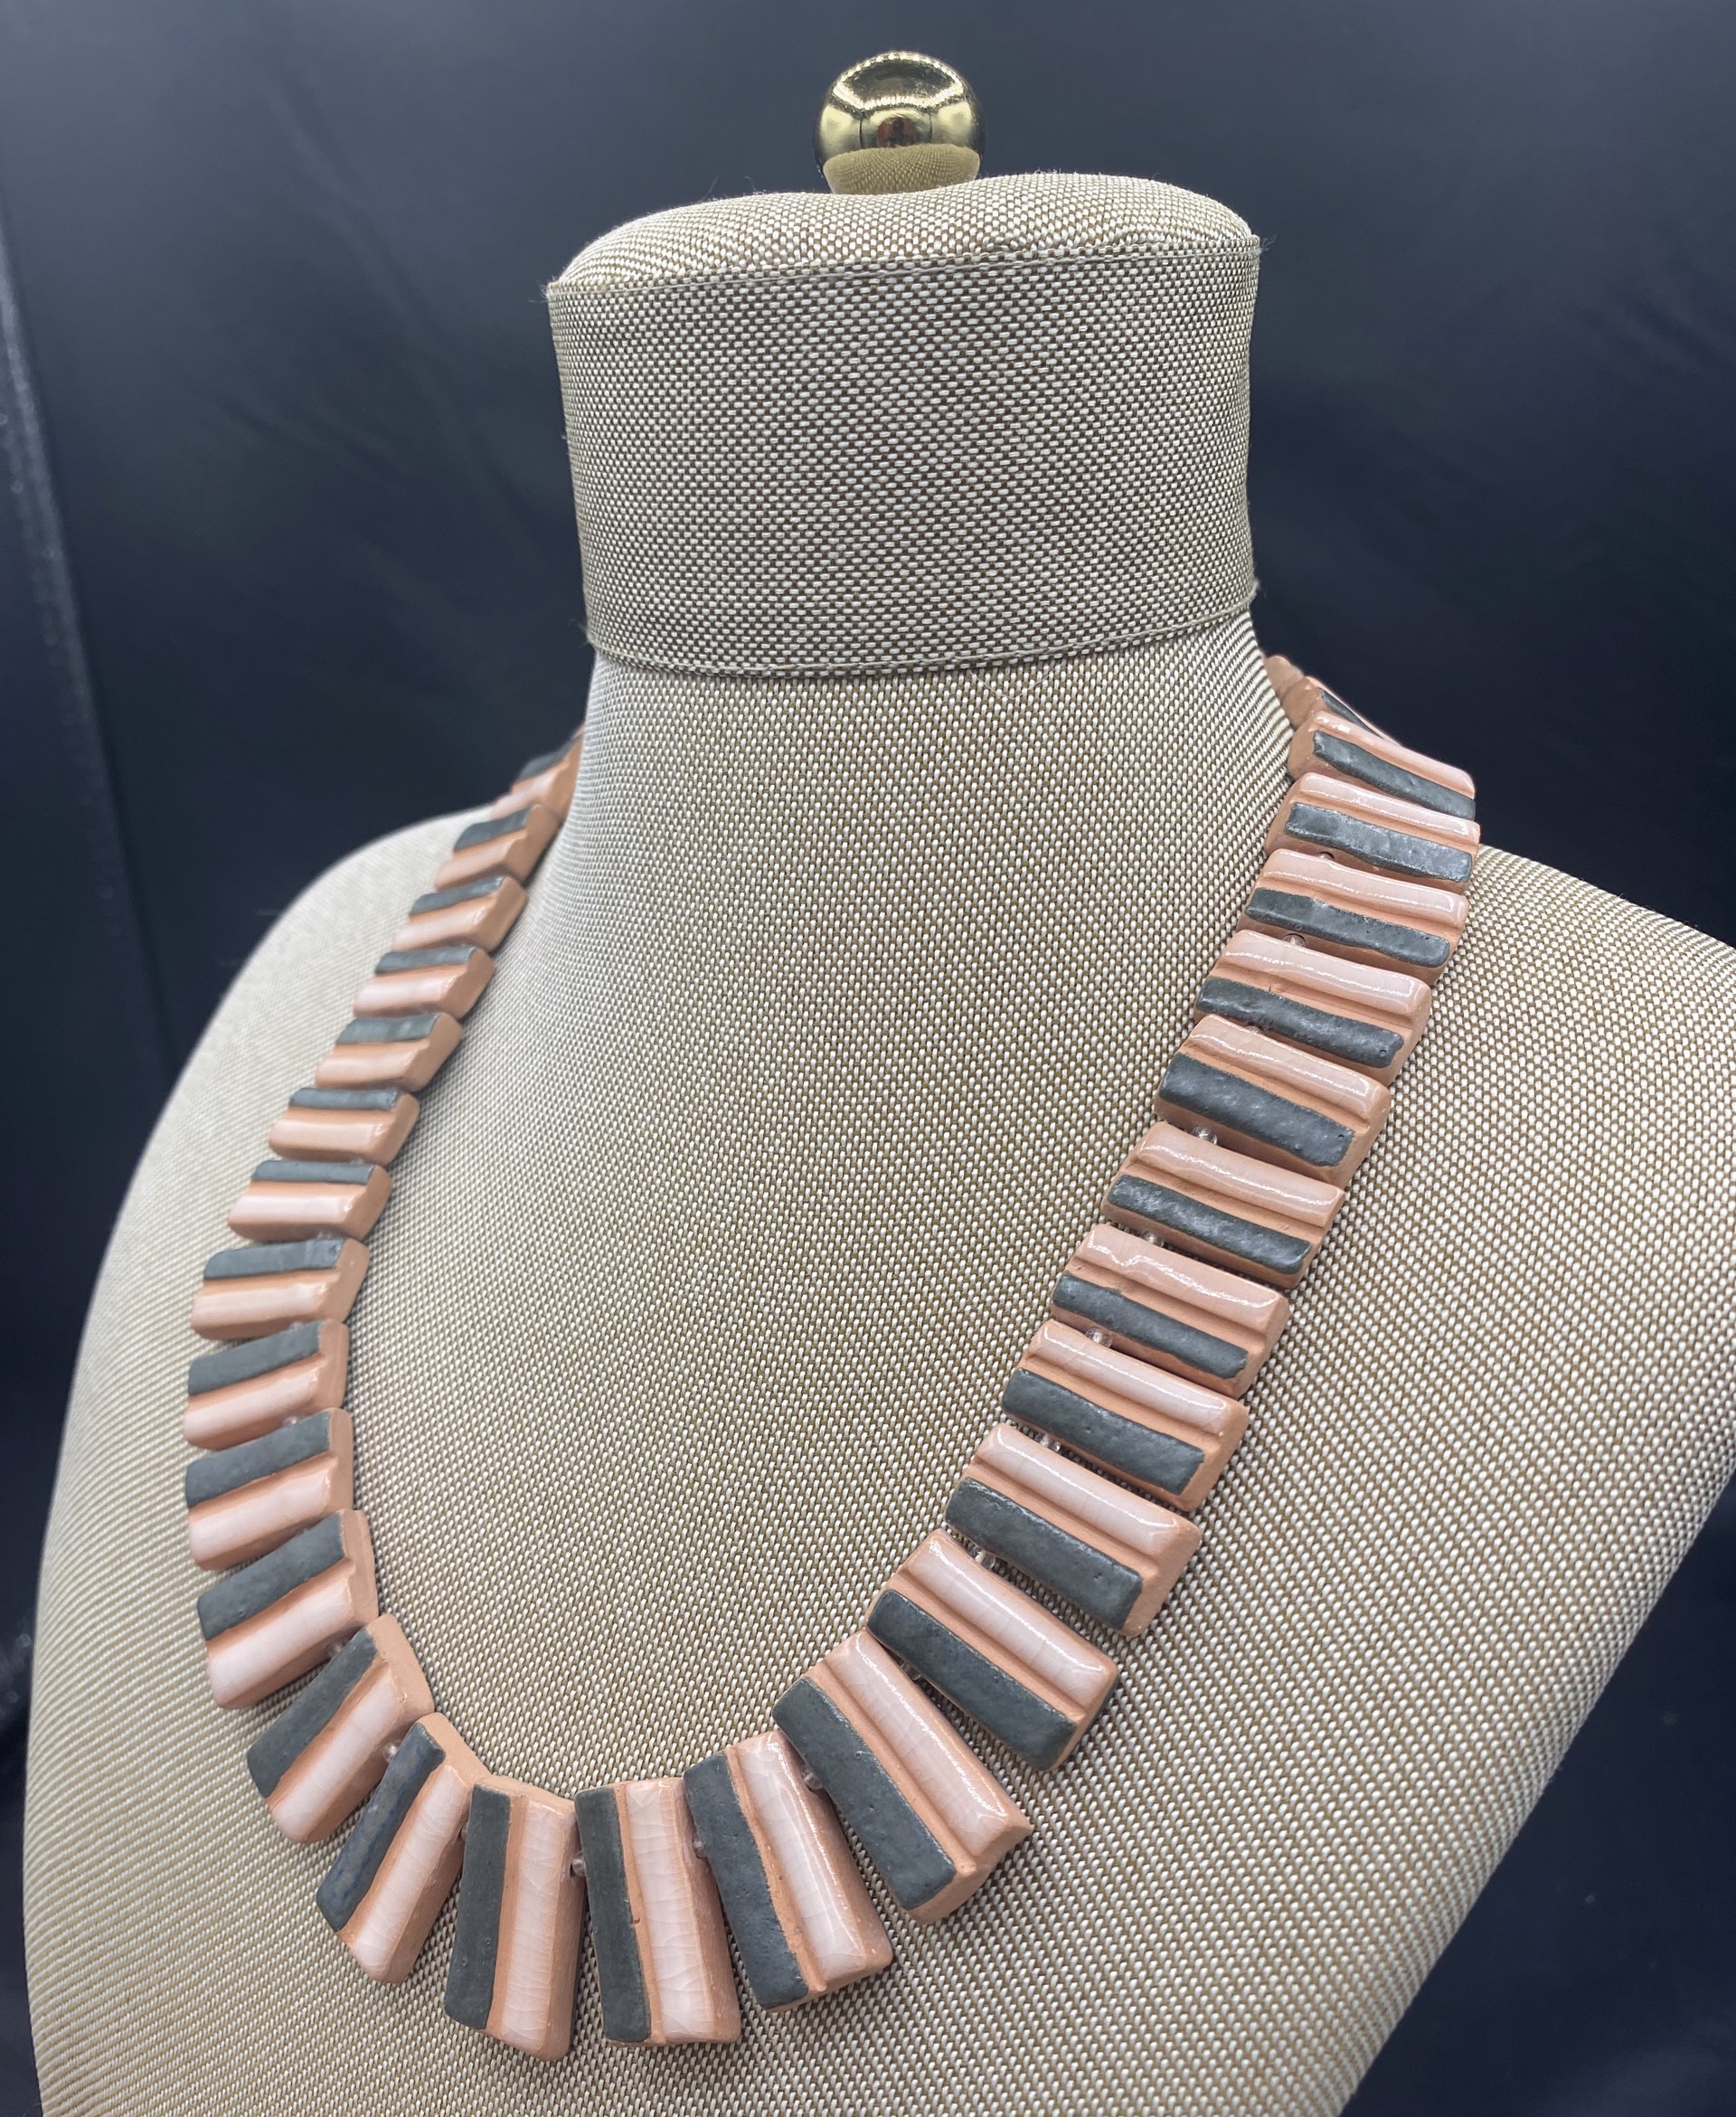 17.5" White, Grey & Terracotta bead necklace & 1.5" earrings by Stella Sullivan